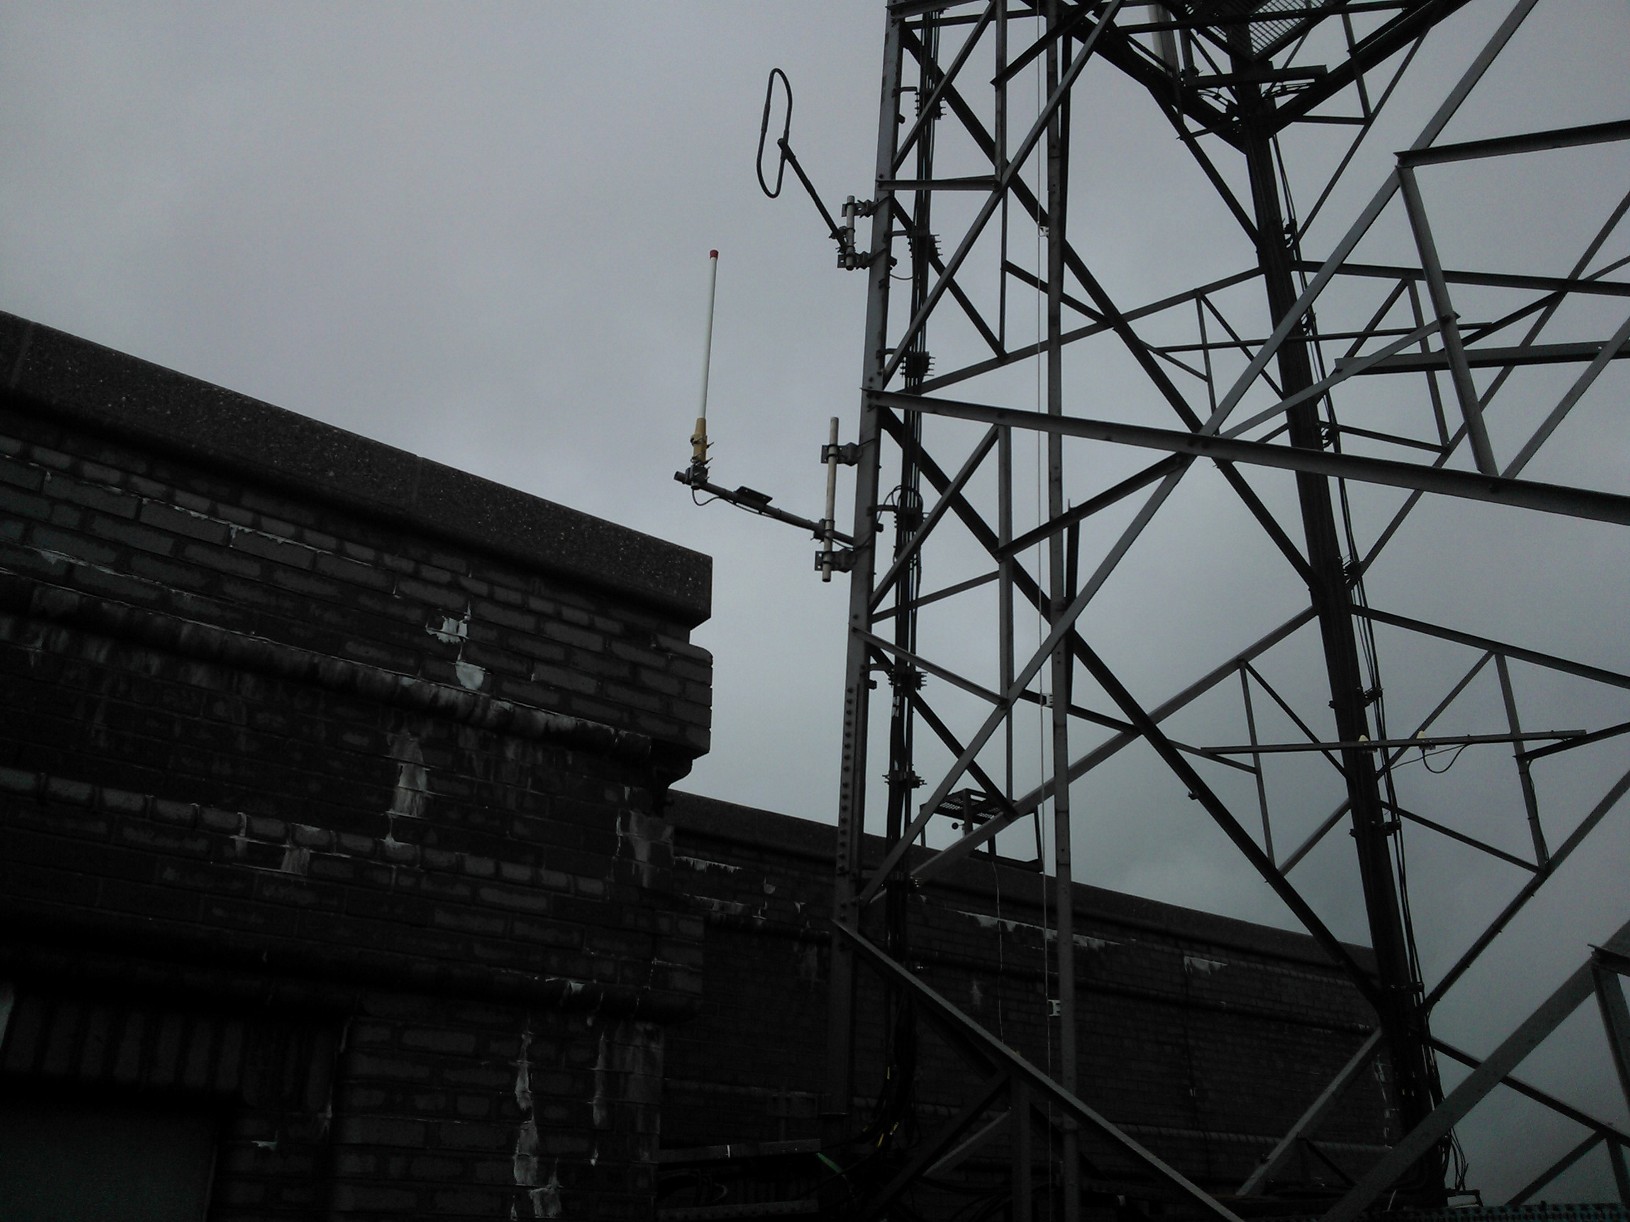 New Antenna in Temporary Location